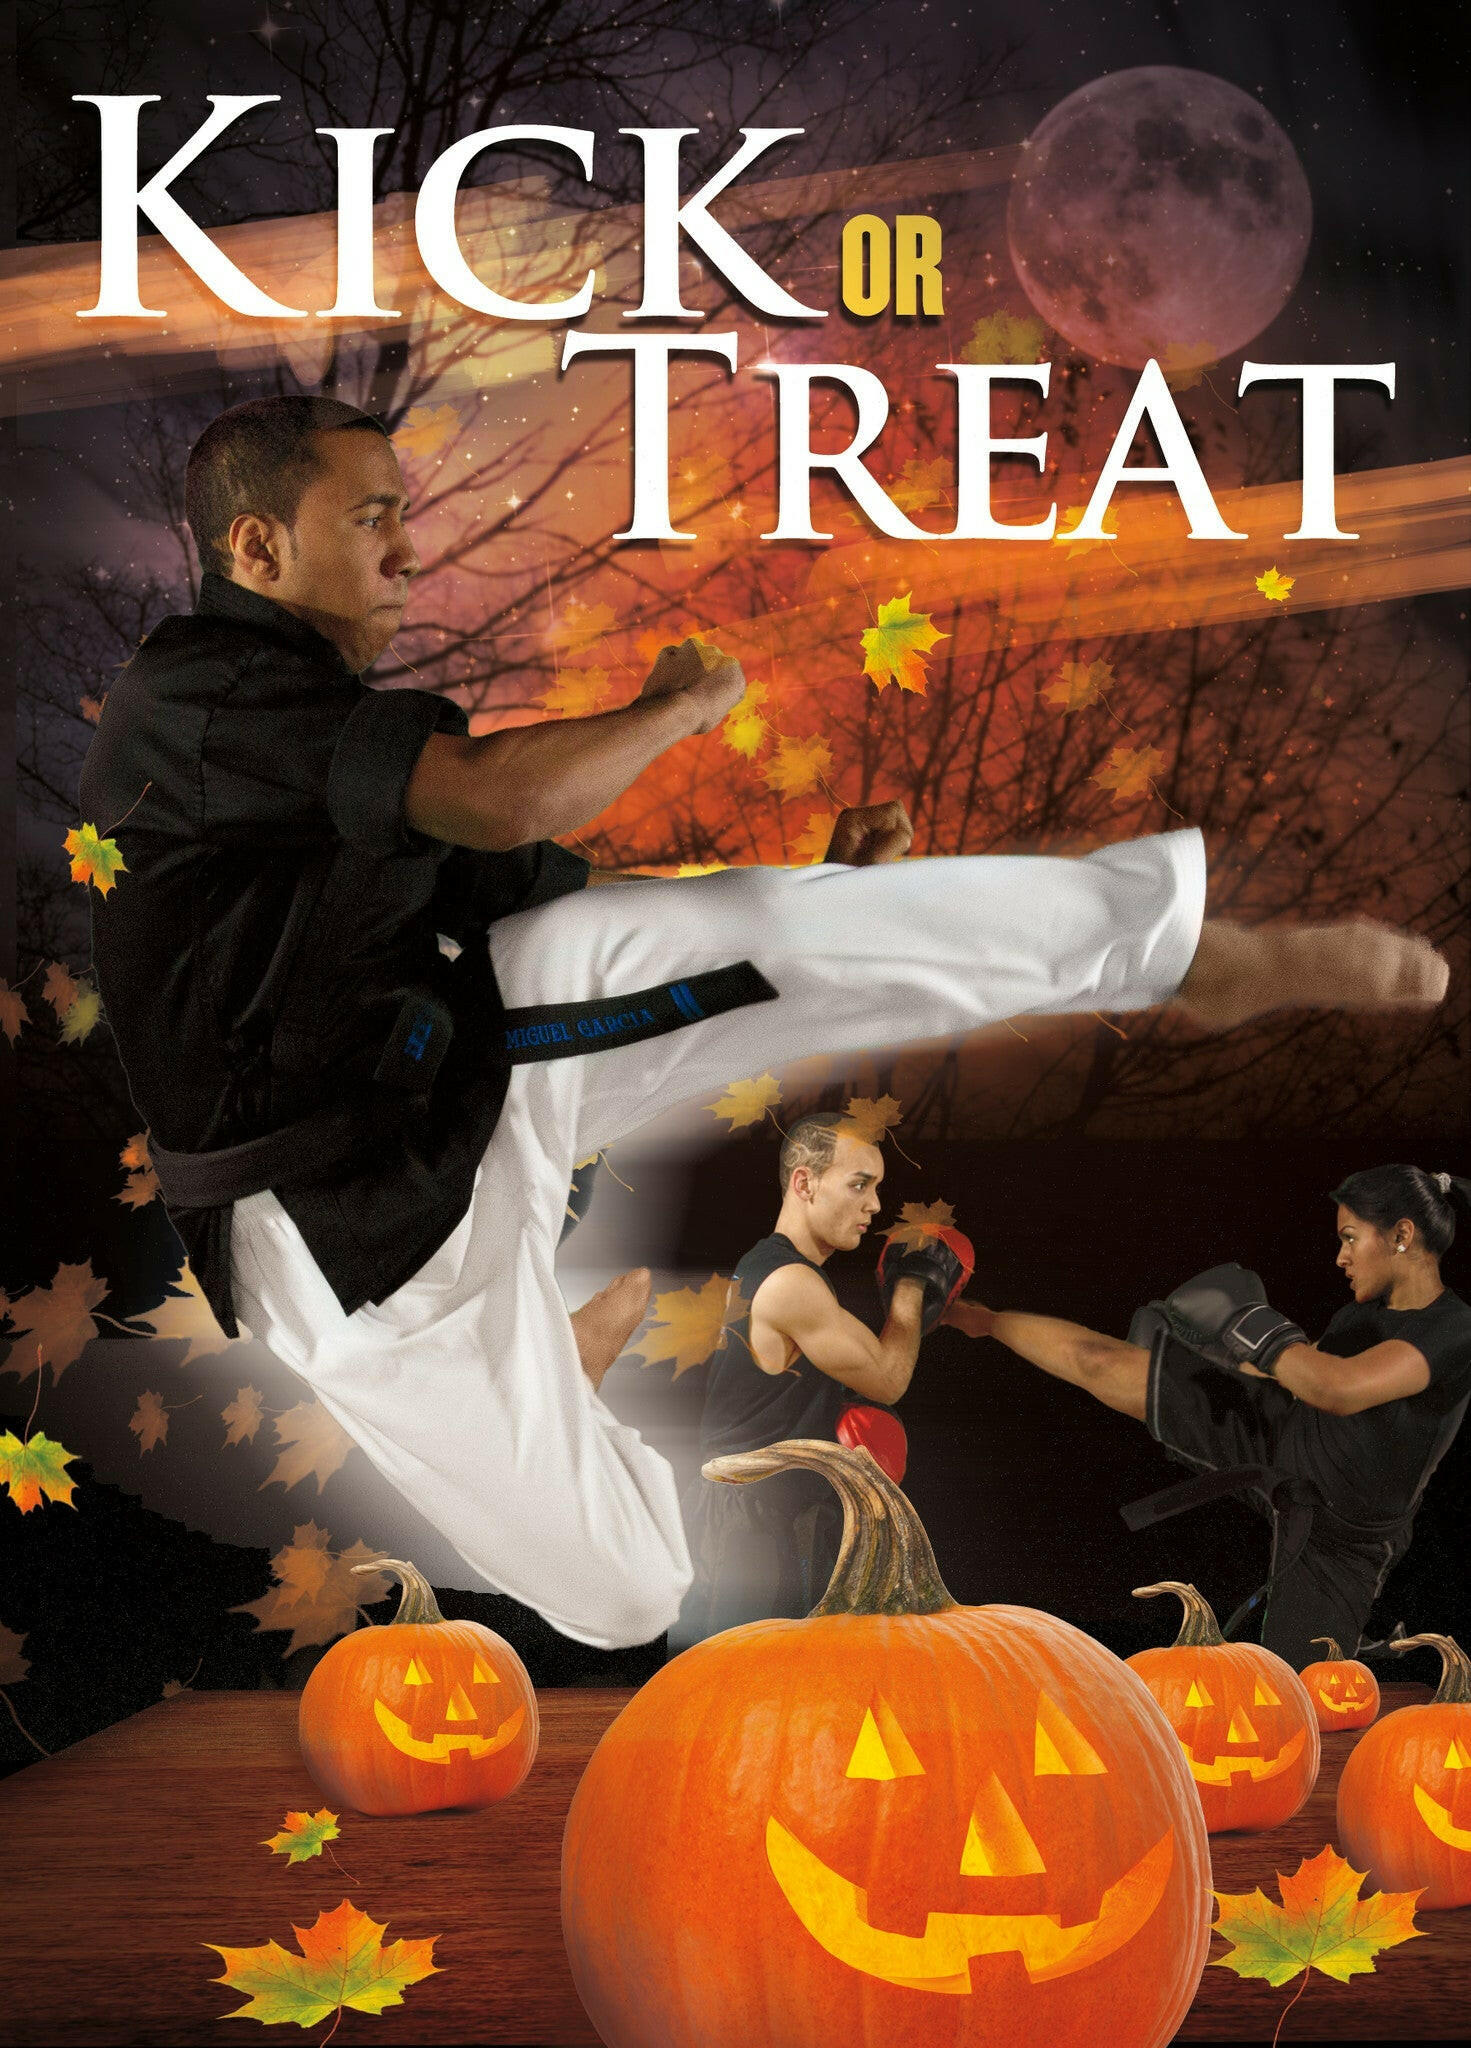 Kick or Treat Safety Tips Halloween Card 3e - Dojo Muscle